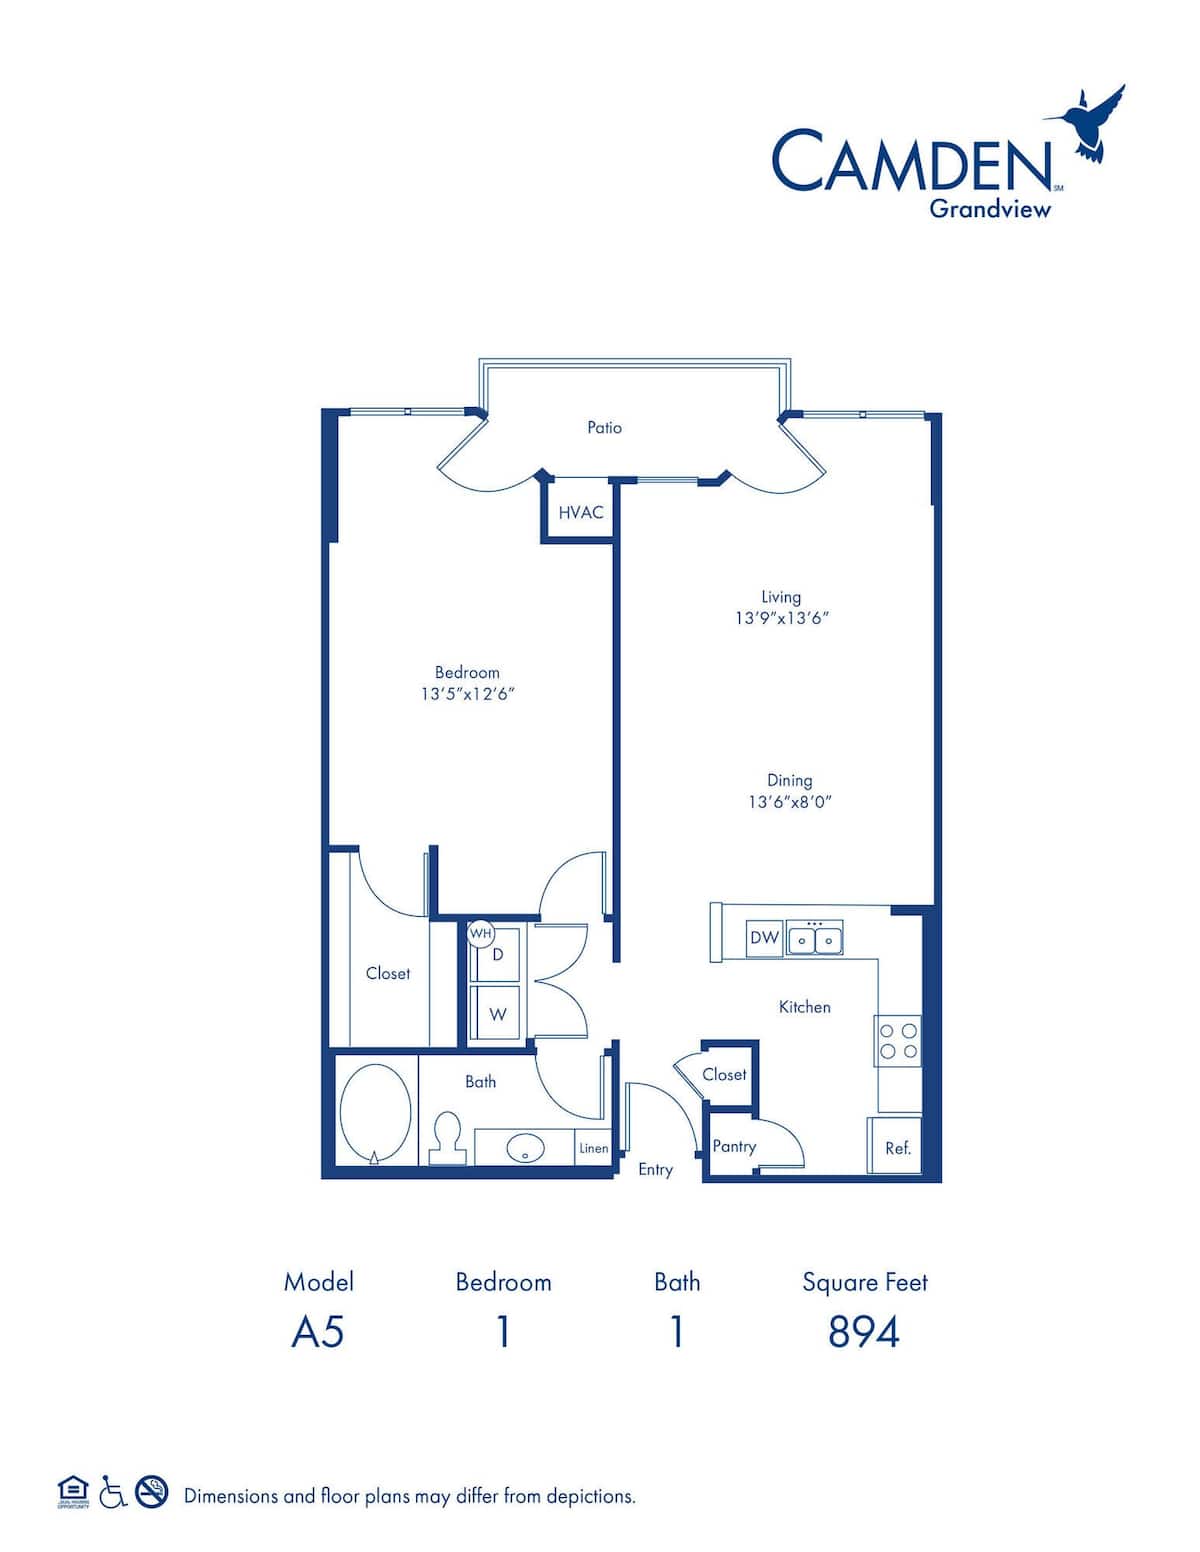 Floorplan diagram for The Lexington, showing 1 bedroom